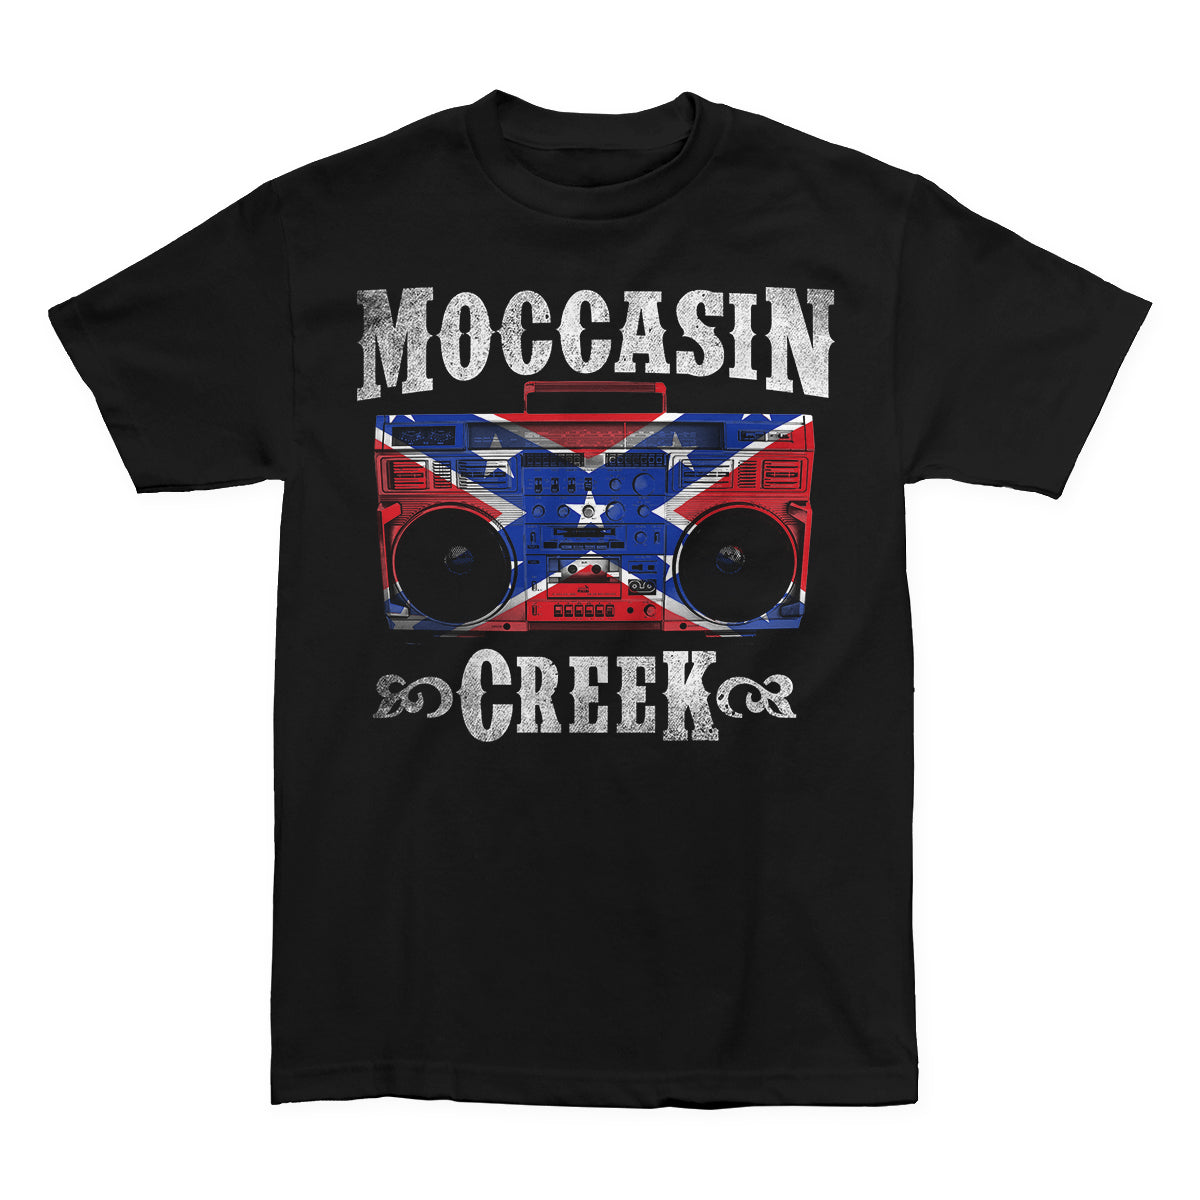 Moccasin Creek "Boombox" Shirt